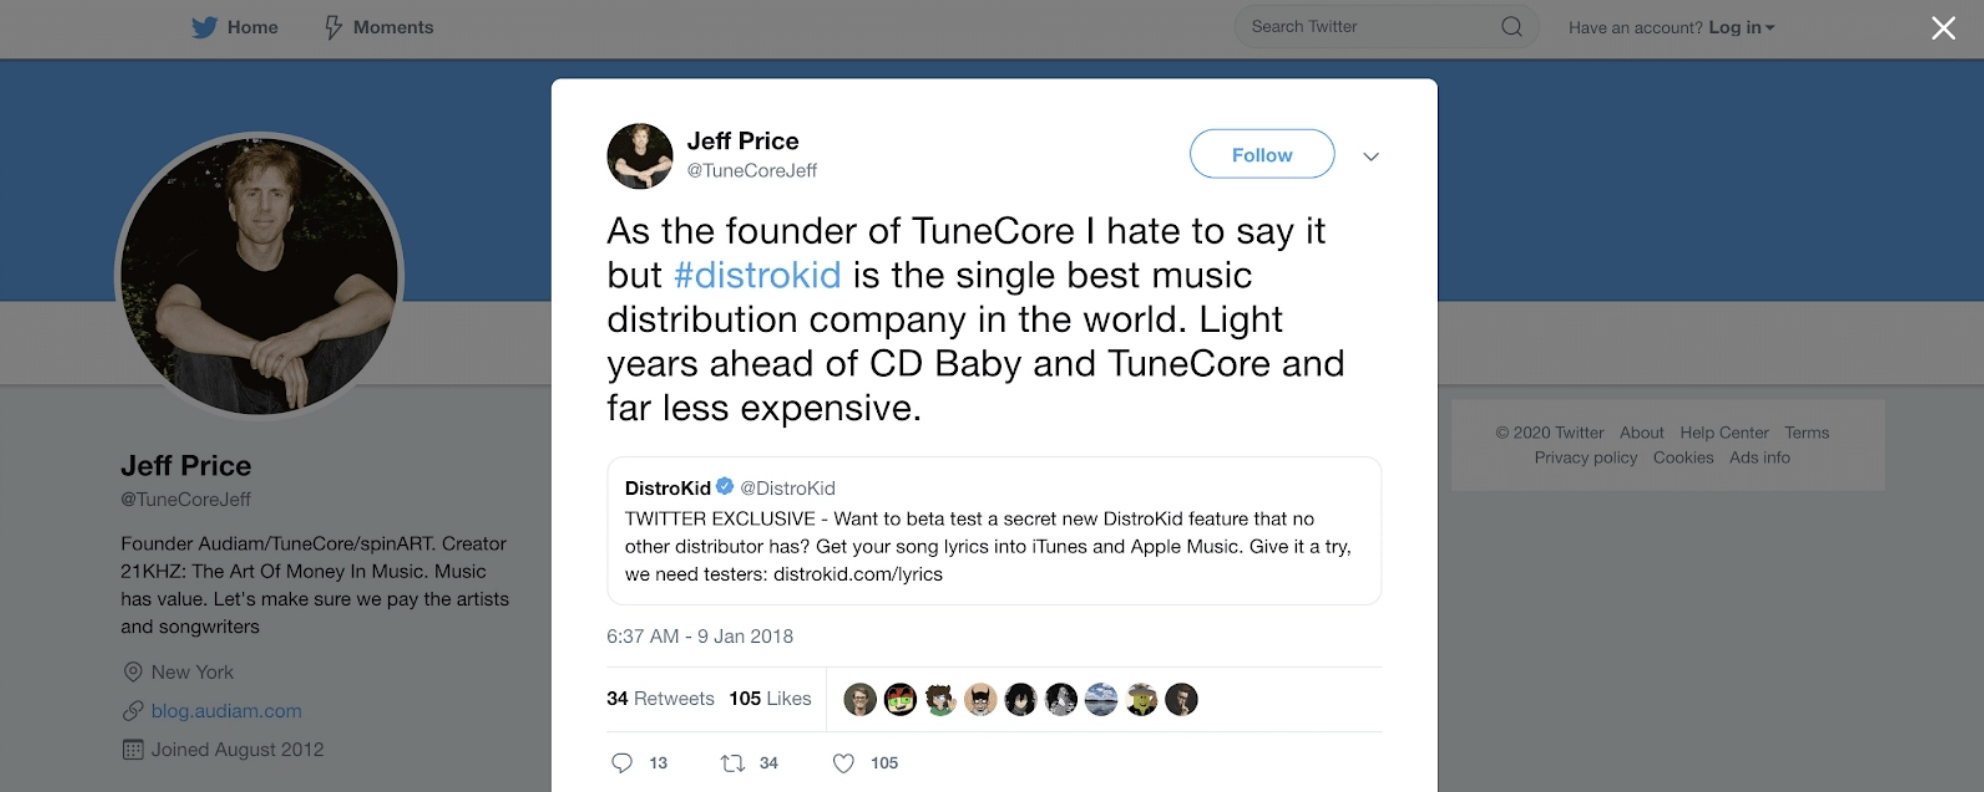 tunecore founder endorses DistroKid